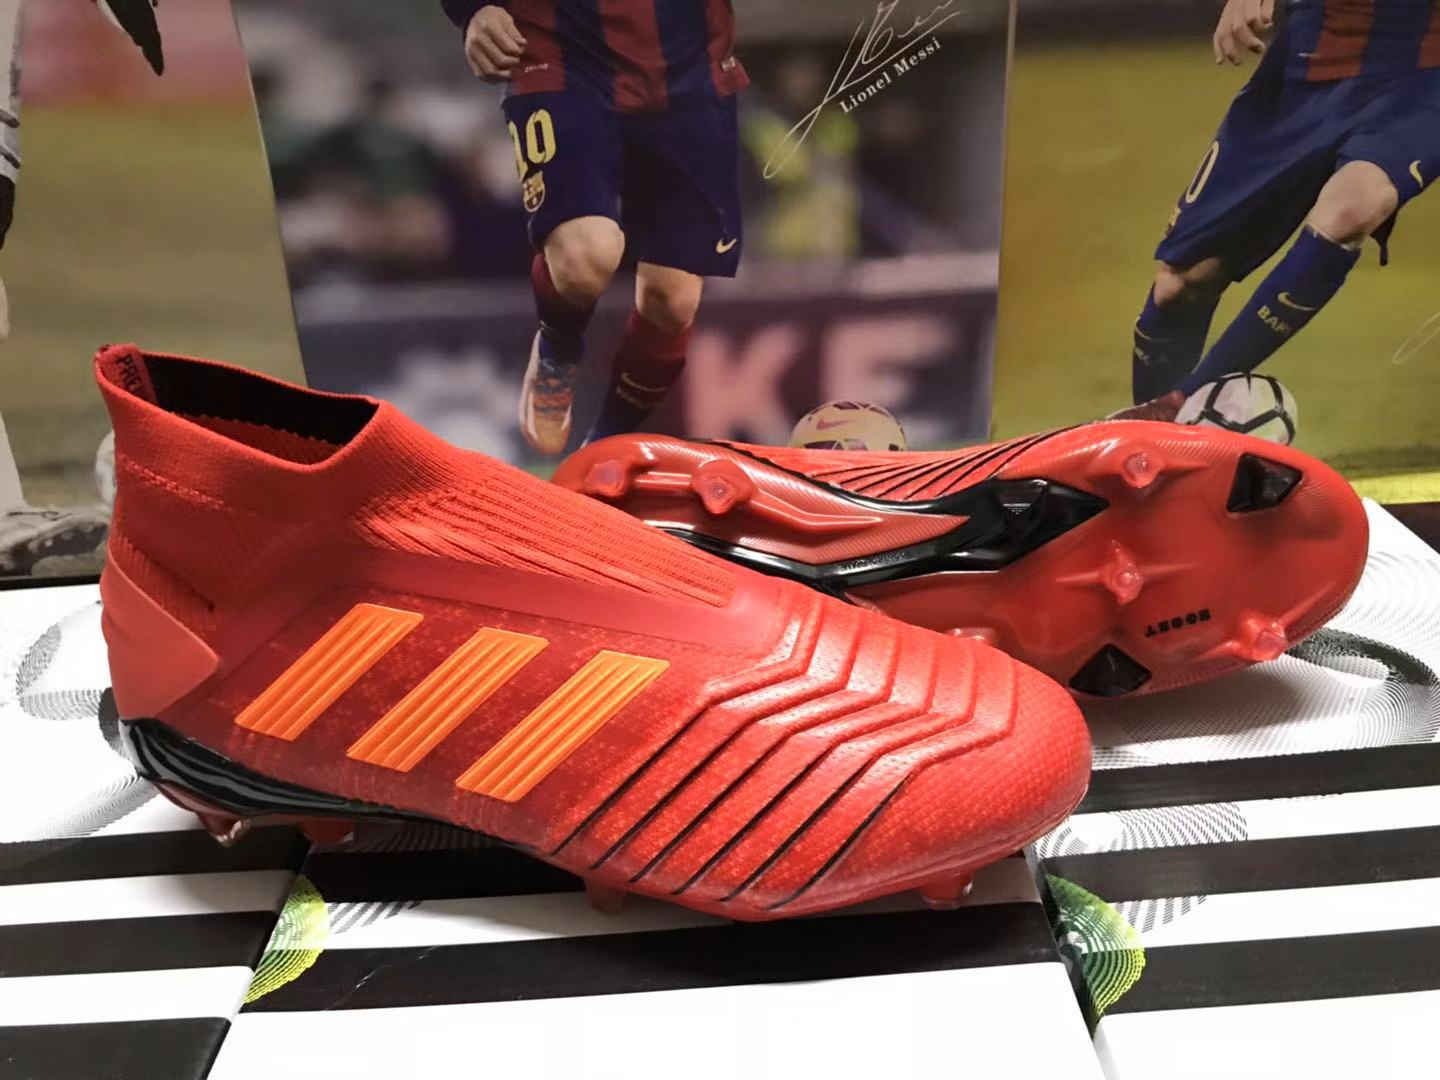 Adidas Predator 19.1 FG Red Black Soccer Cleats BC0552 - Premium Performance Footwear